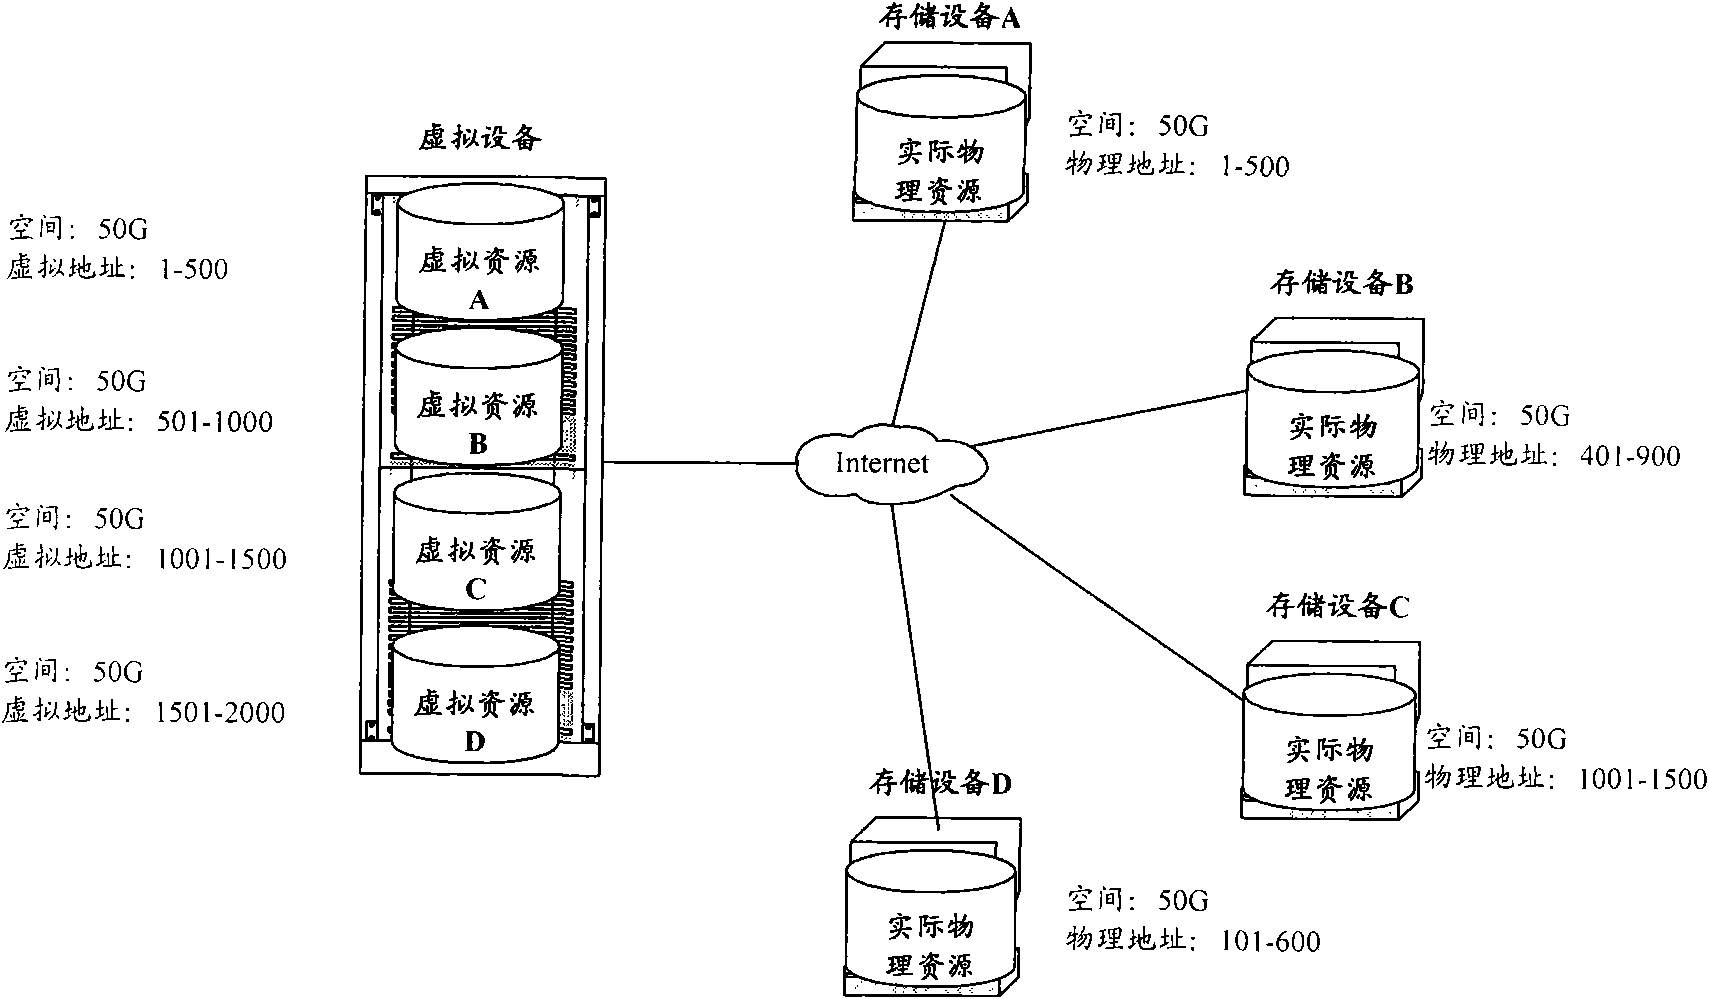 Method and equipment for database backup